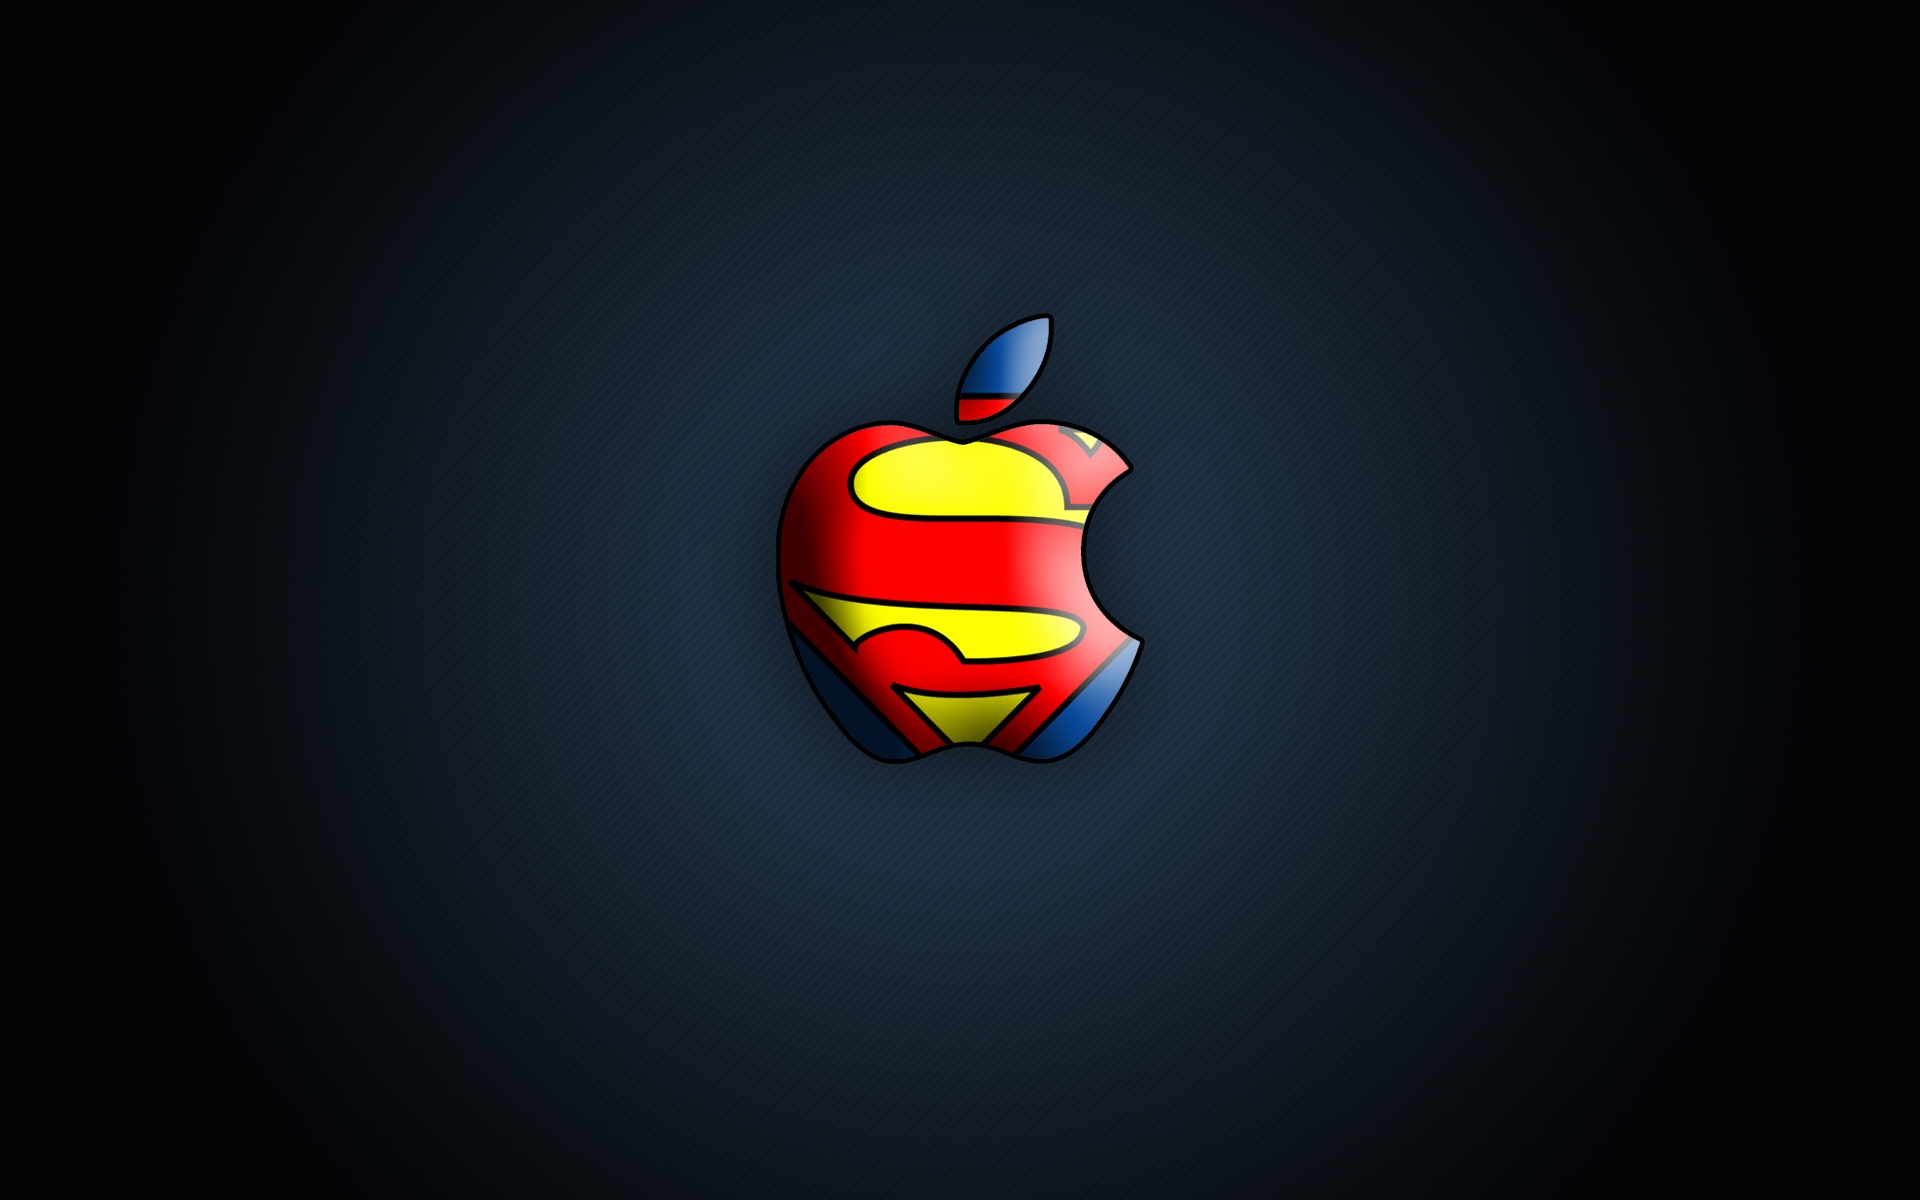 Cool Apple Logos Wallpaper